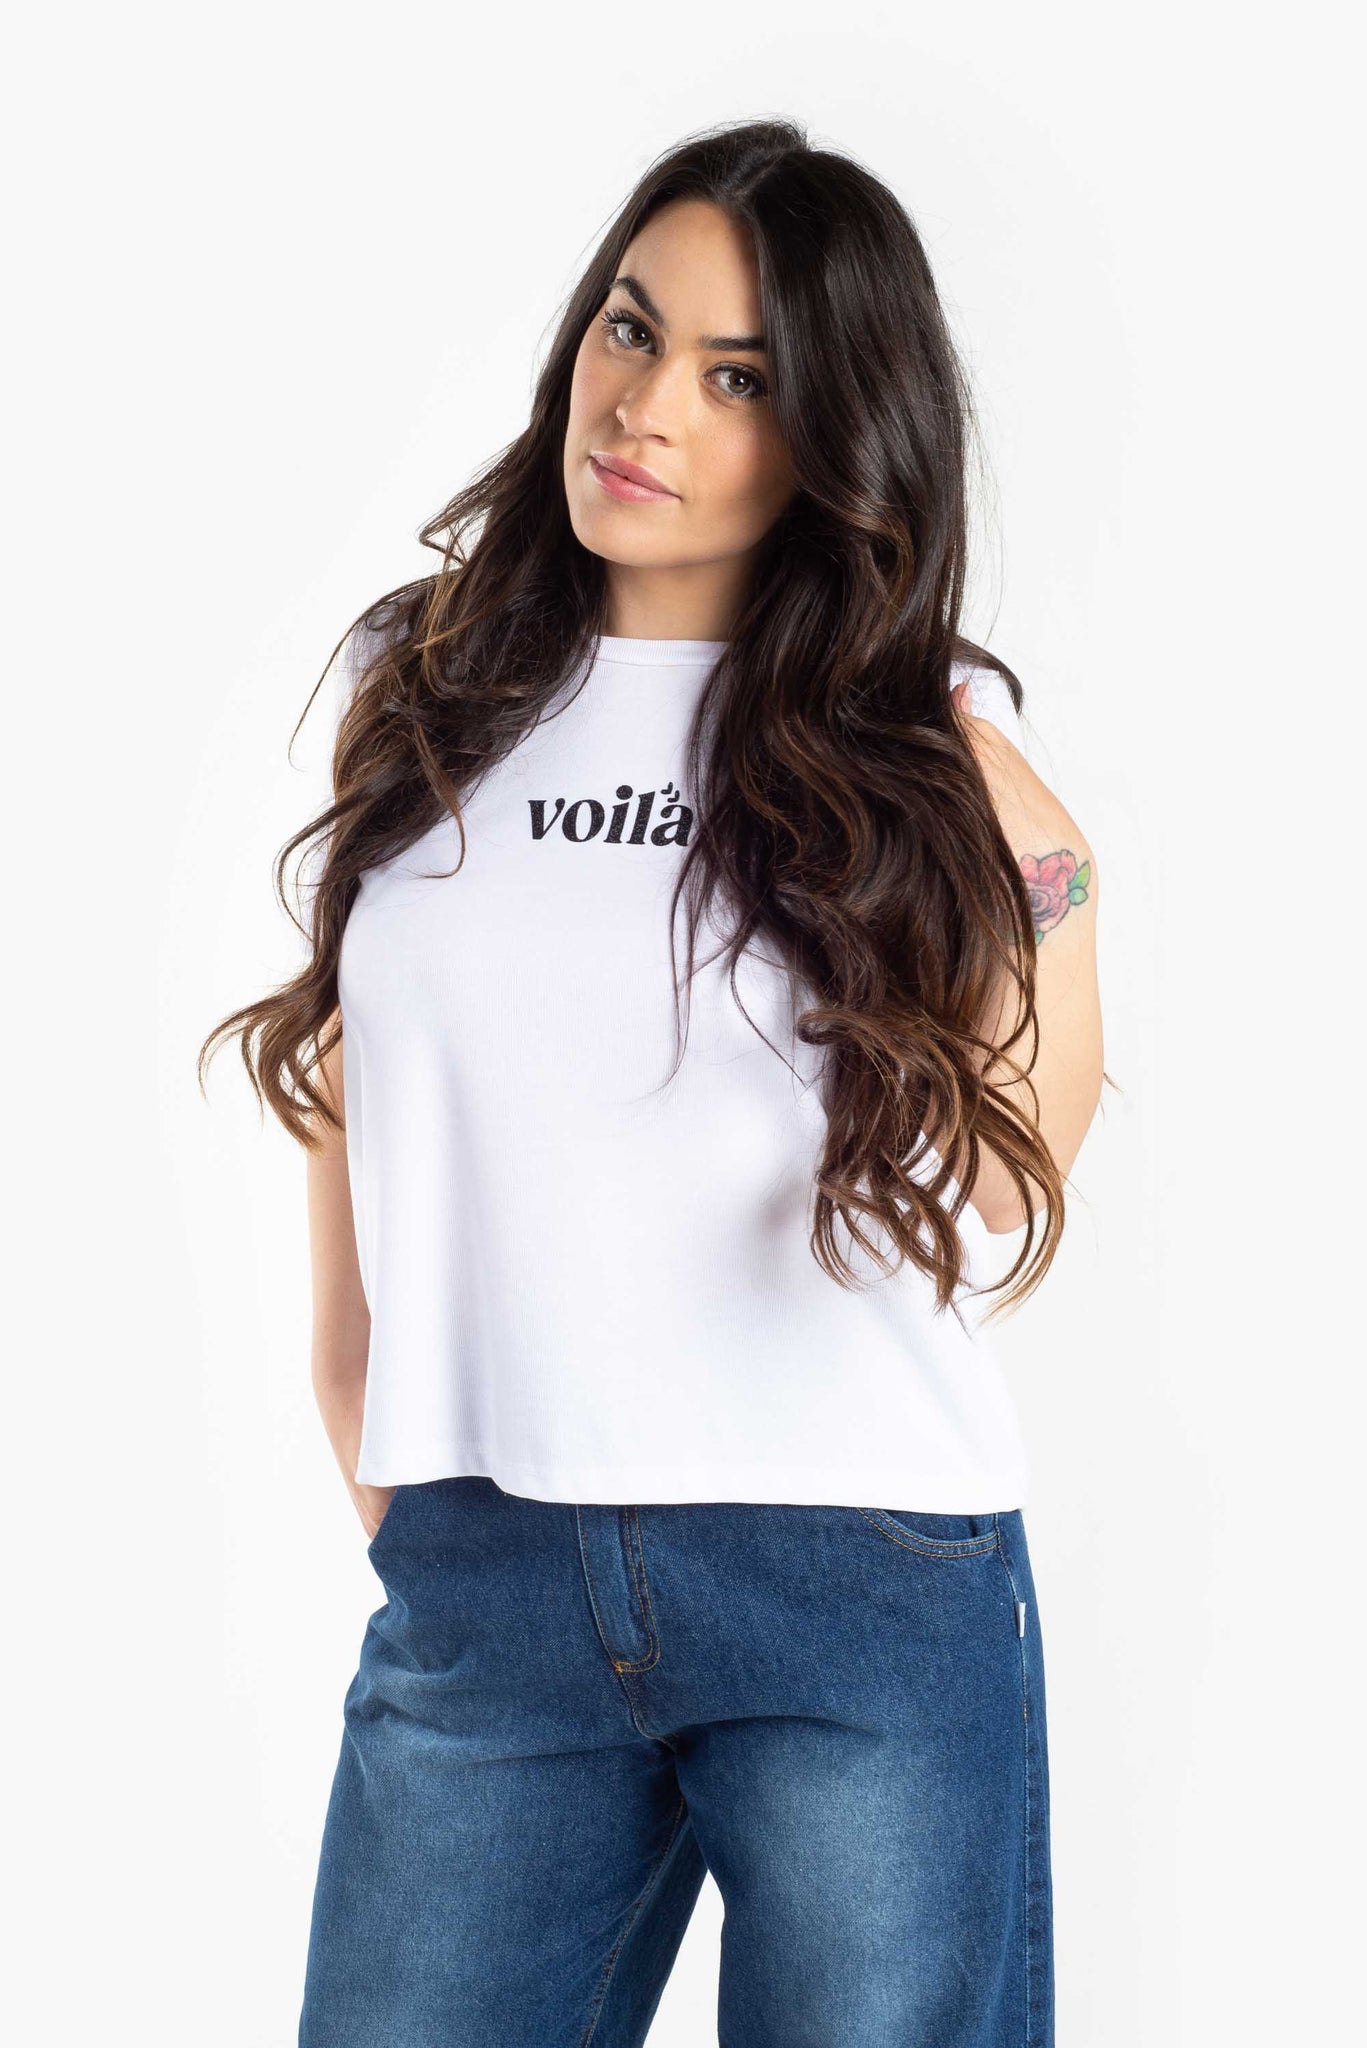 Voila t-shirt